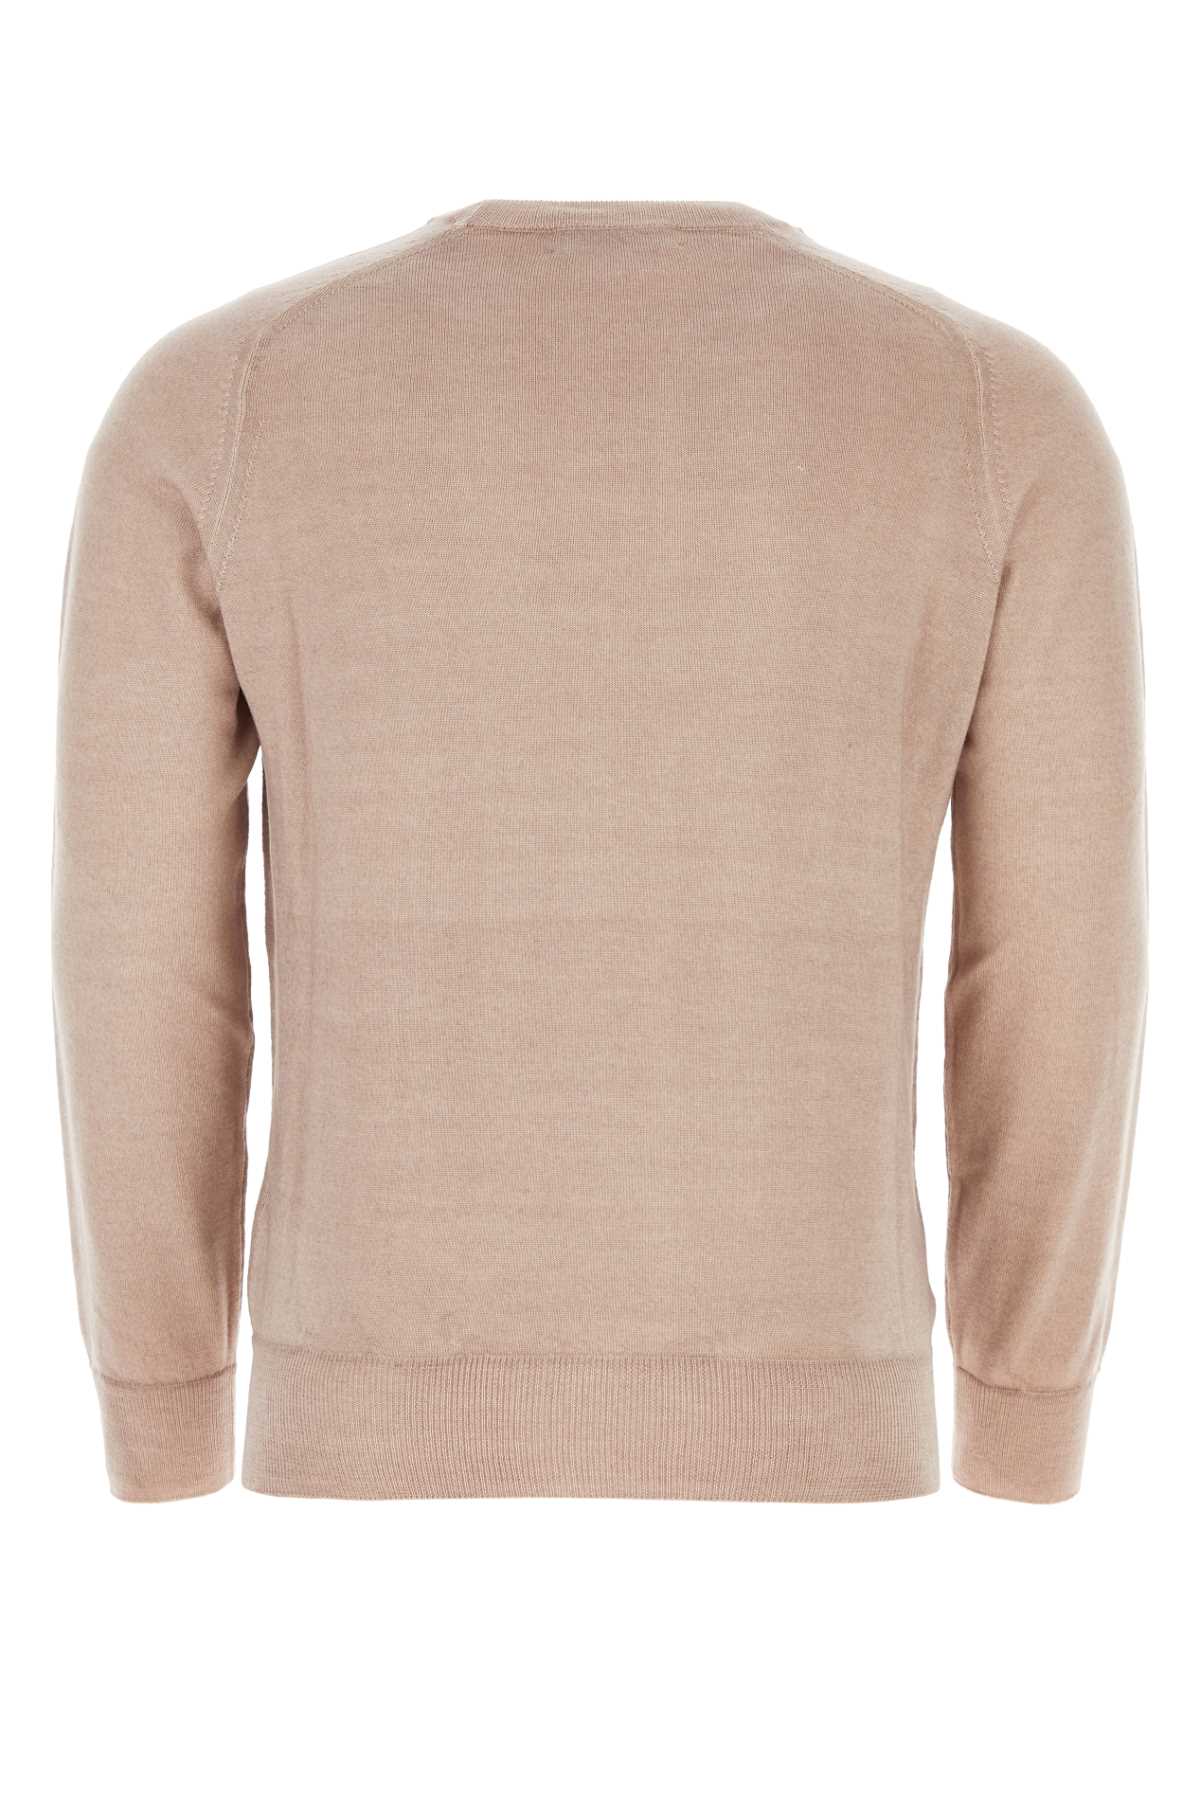 Etro Powder Pink Wool Sweater In 651